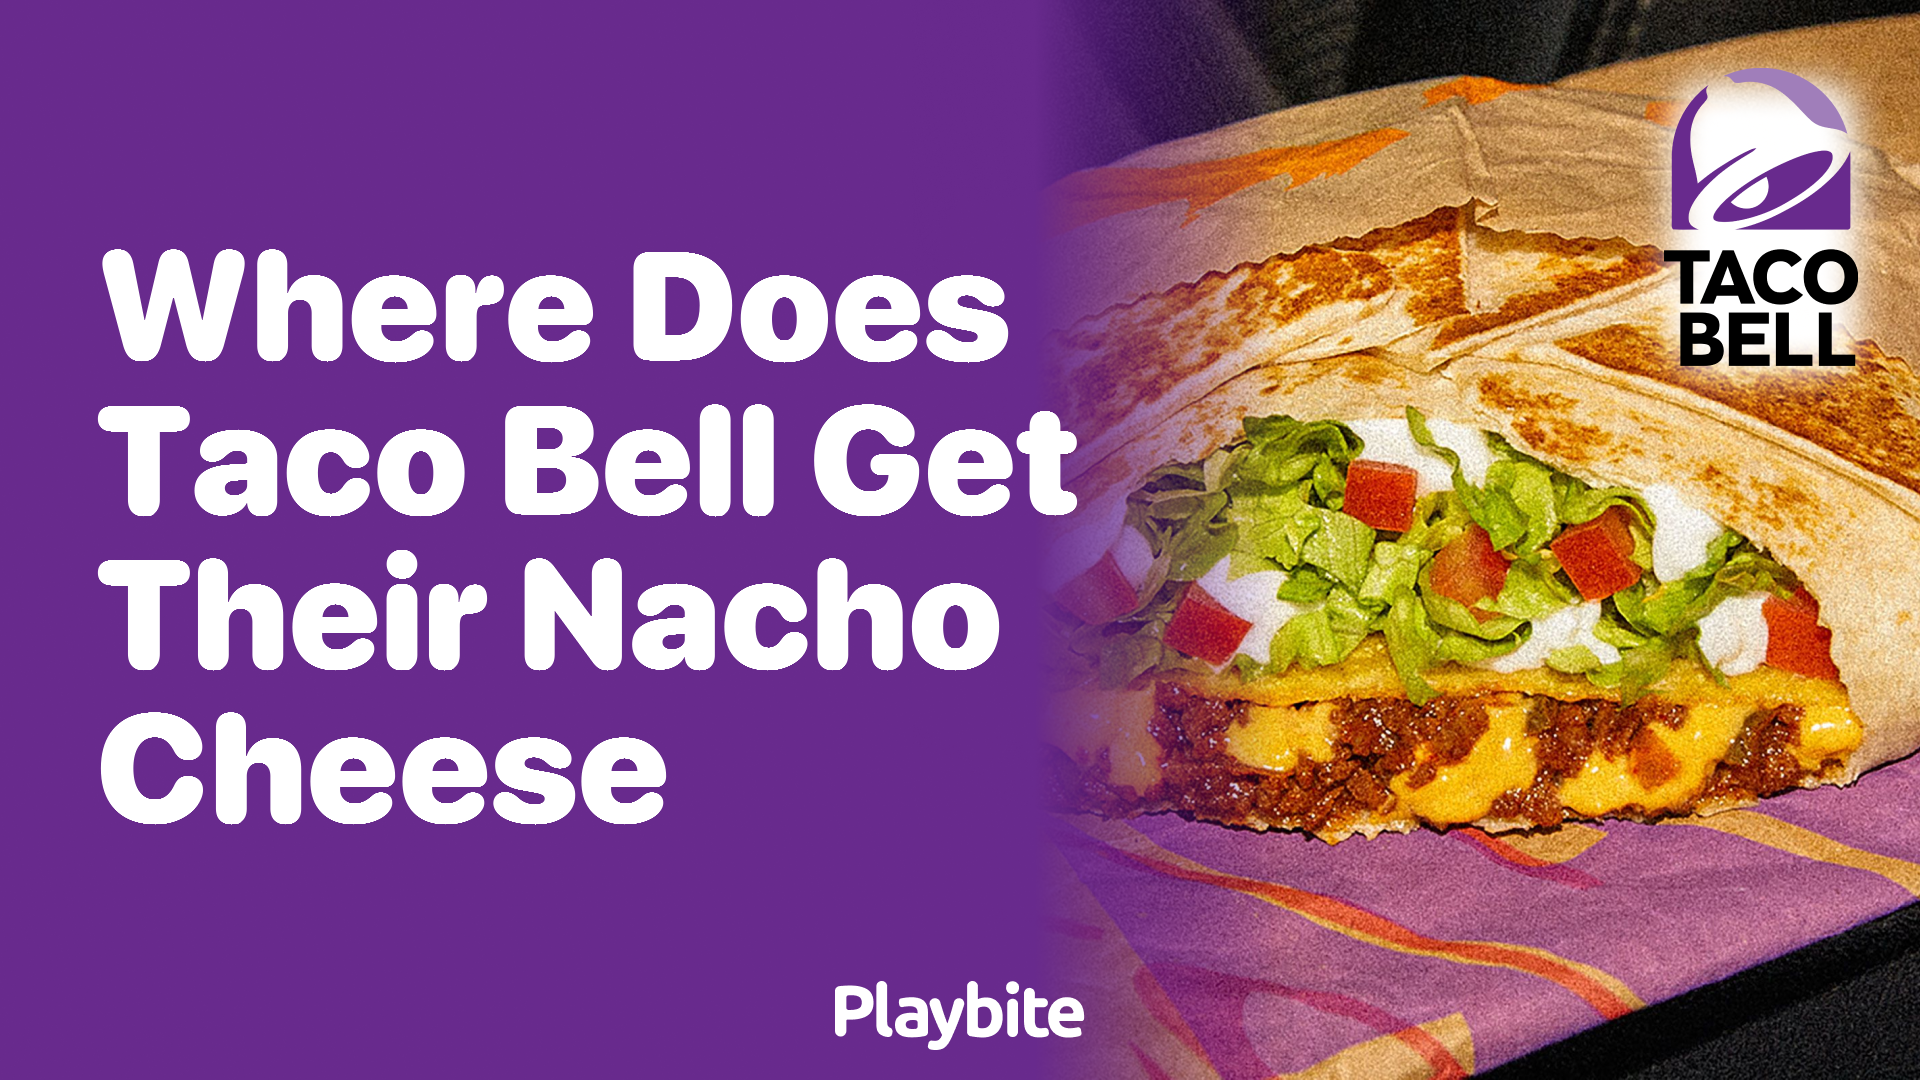 Where Does Taco Bell Get Their Nacho Cheese?